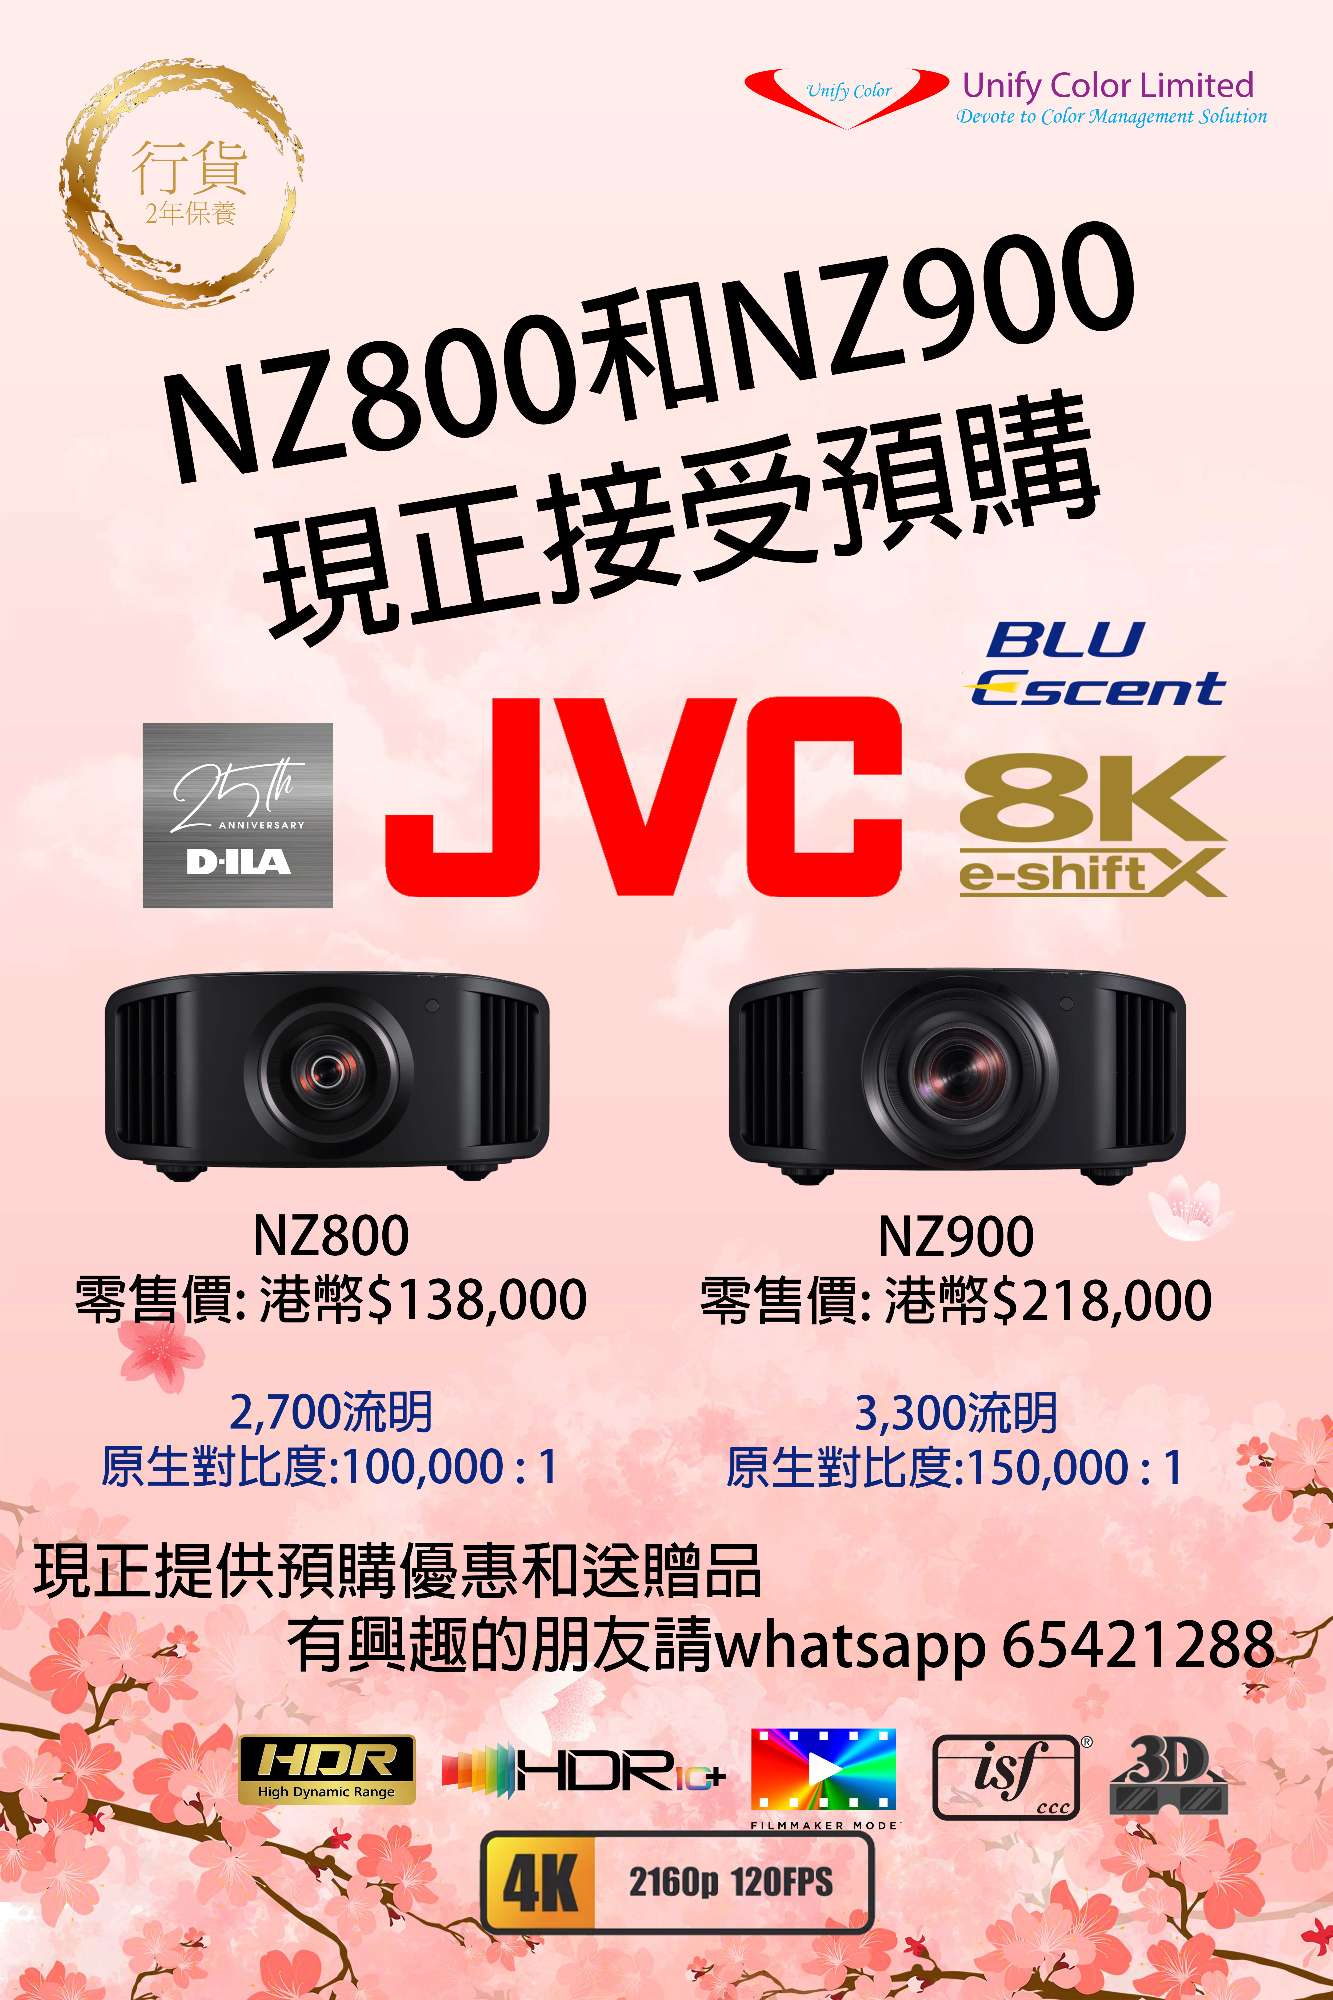 202405 NZ800_NZ900 promotion_JVC copy.jpg